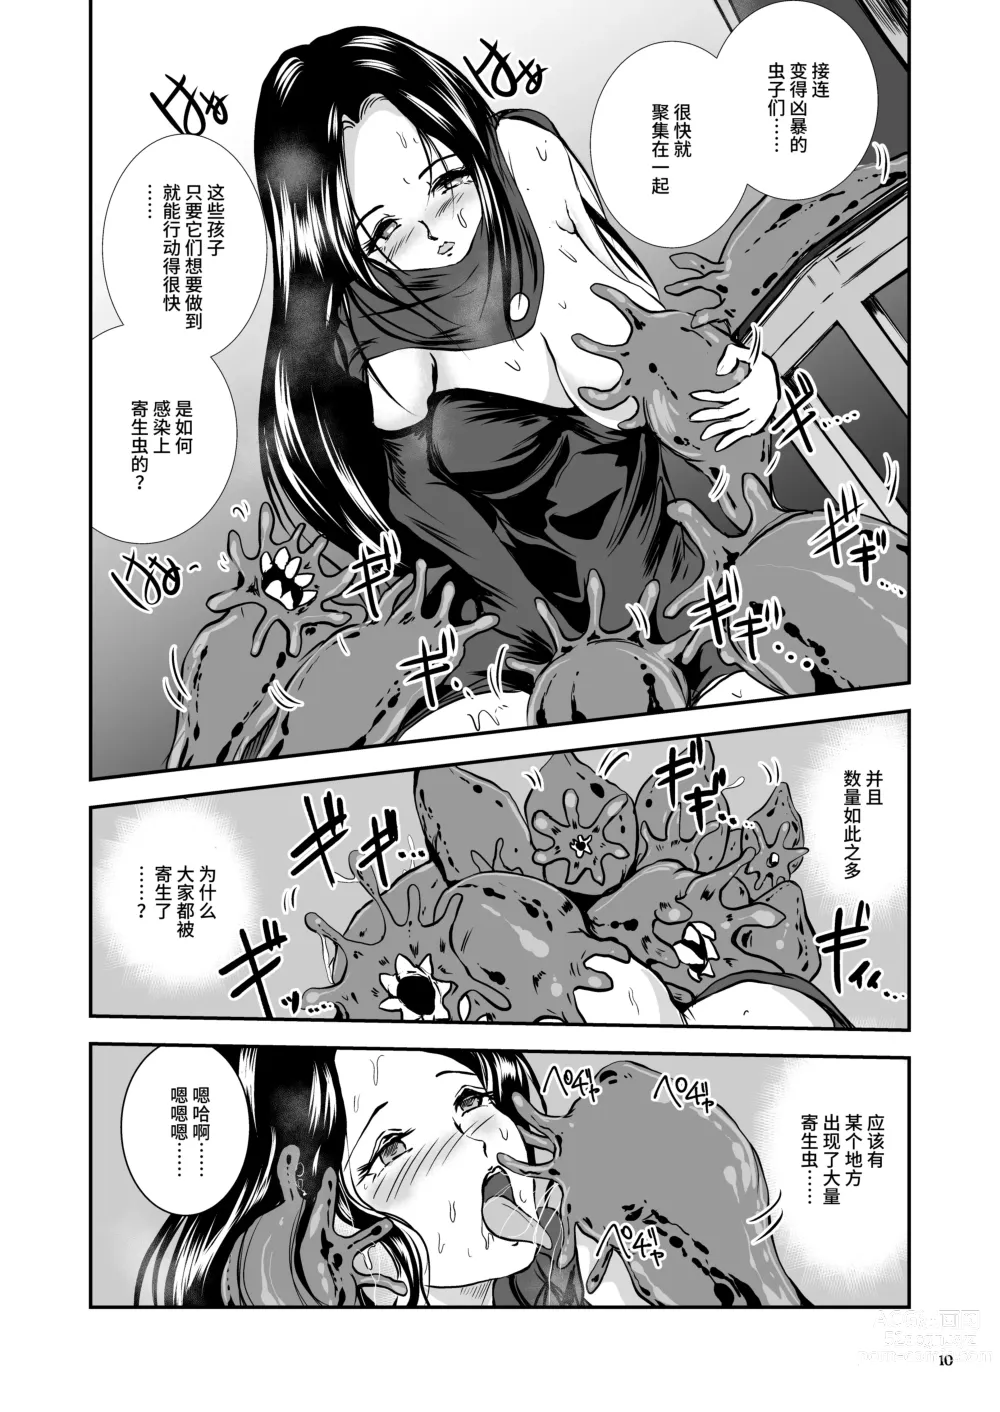 Page 10 of doujinshi Oonamekuji to Kurokami no Mahoutsukai - Parasitized Giant Slugs V.S. Sorceress of the Black Hair as Aura